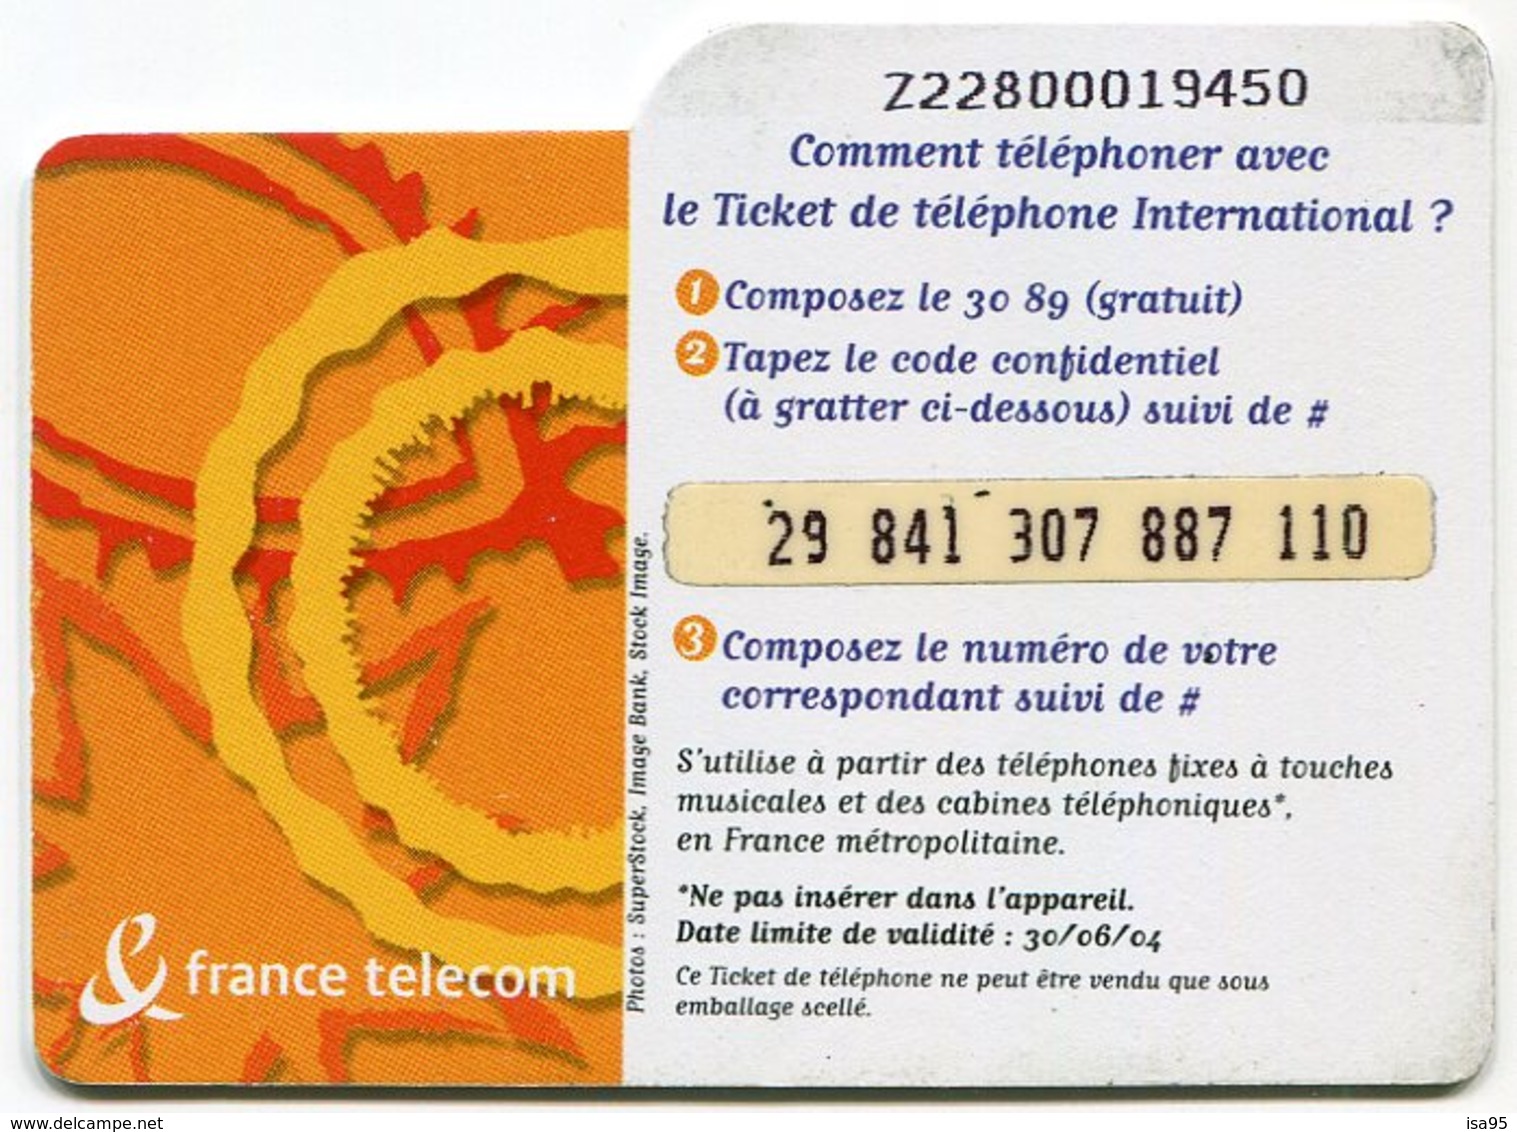 TELECARTE-LE TICKET DE TELEPHONE INTERNATIONAL-2004-15€ - FT Tickets